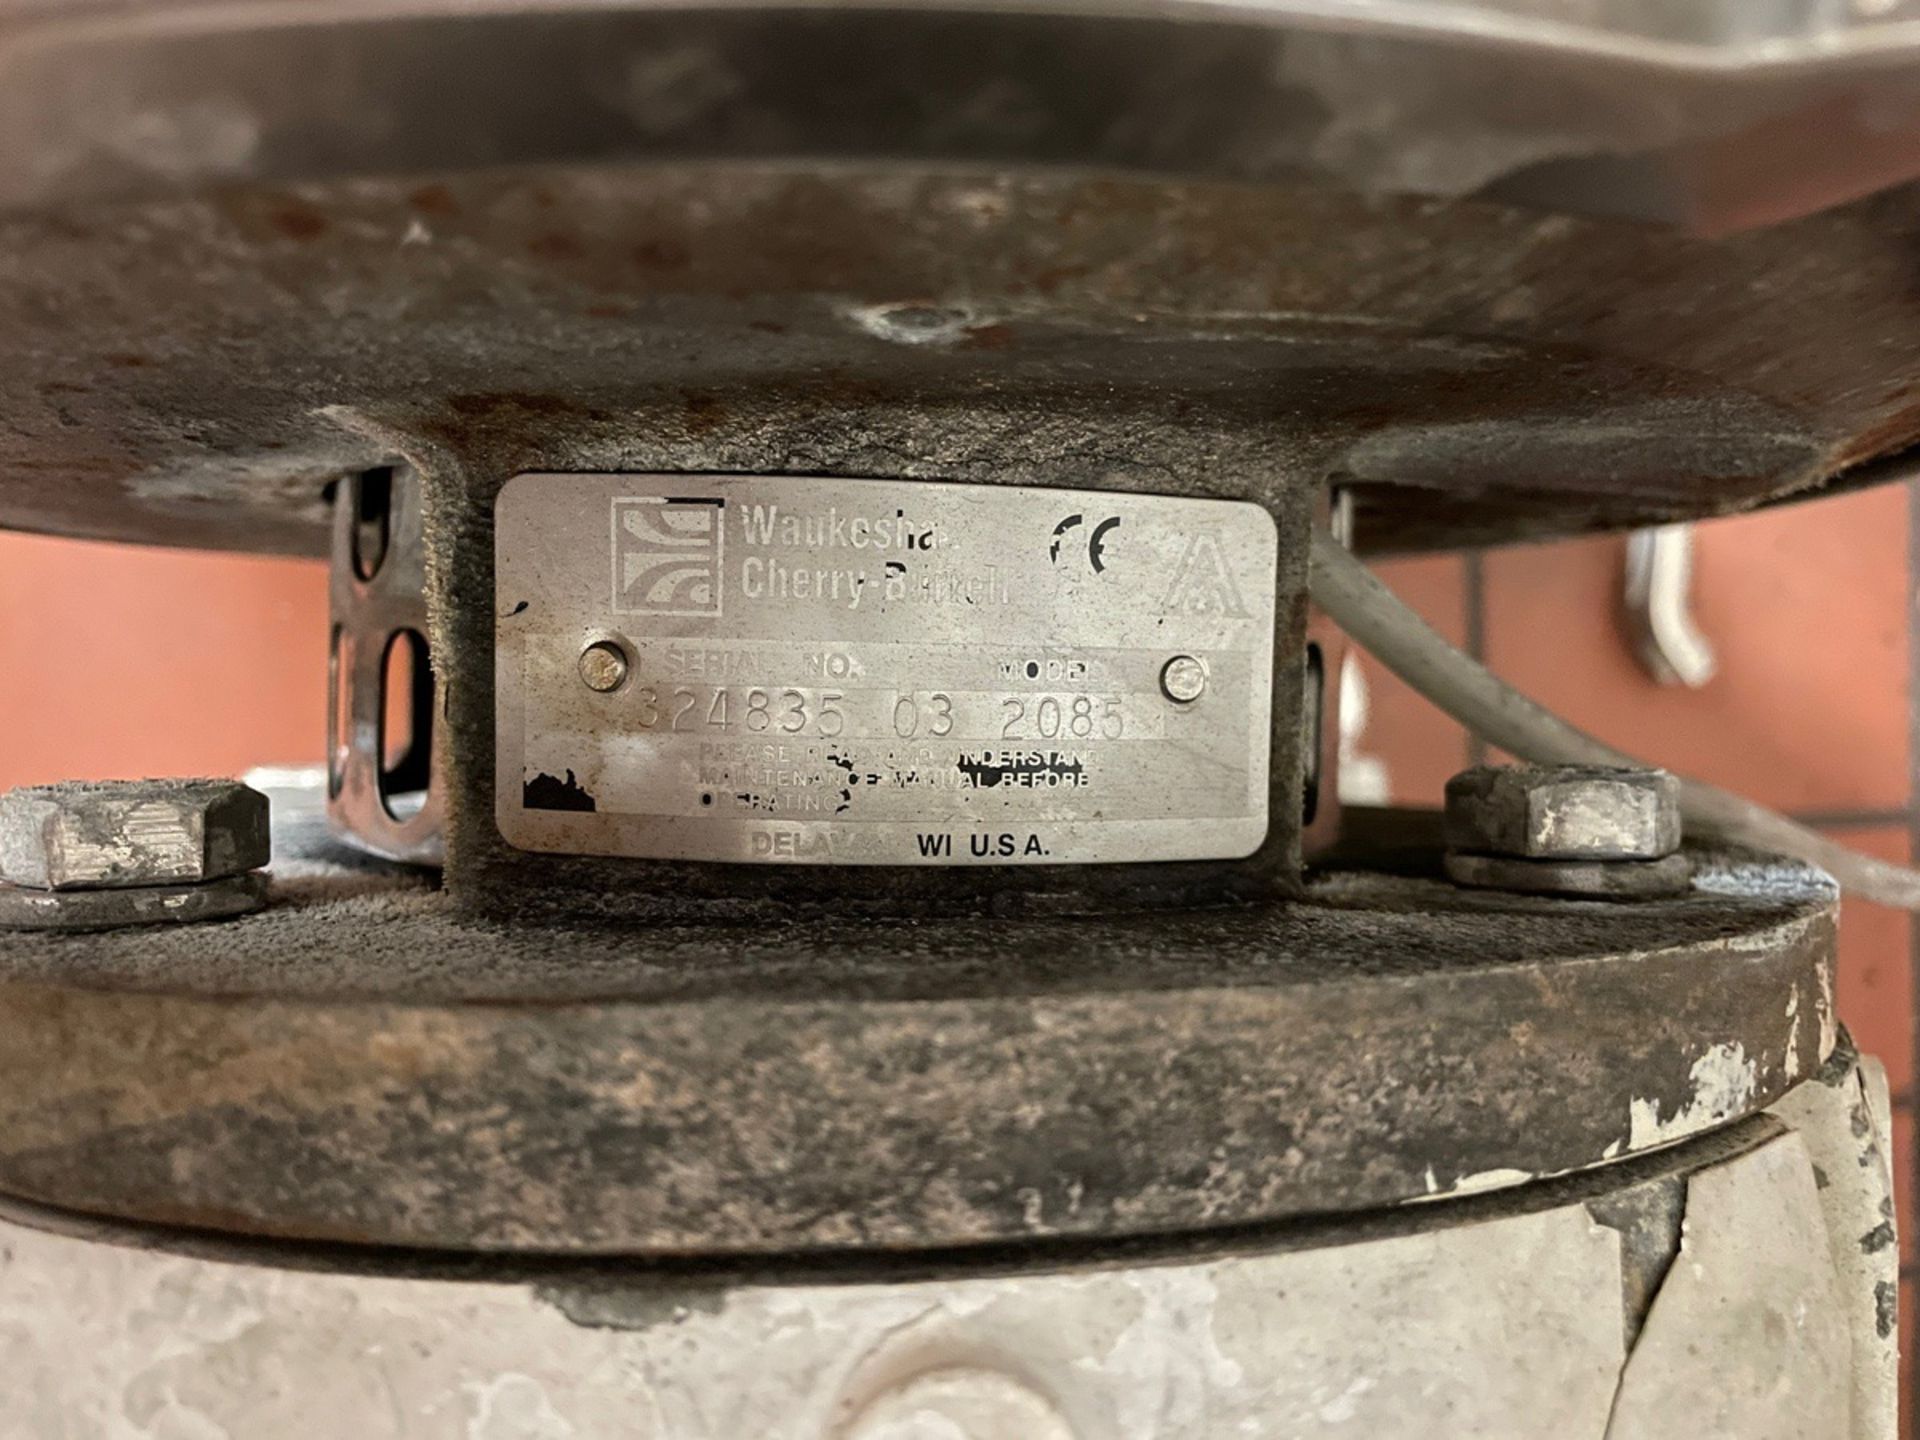 Waukesha Cherry Burrell Centrifugal Pump, 7.5 HP, Model 2085, S/N: 324835-03 | Rig Fee: $150 - Image 2 of 3